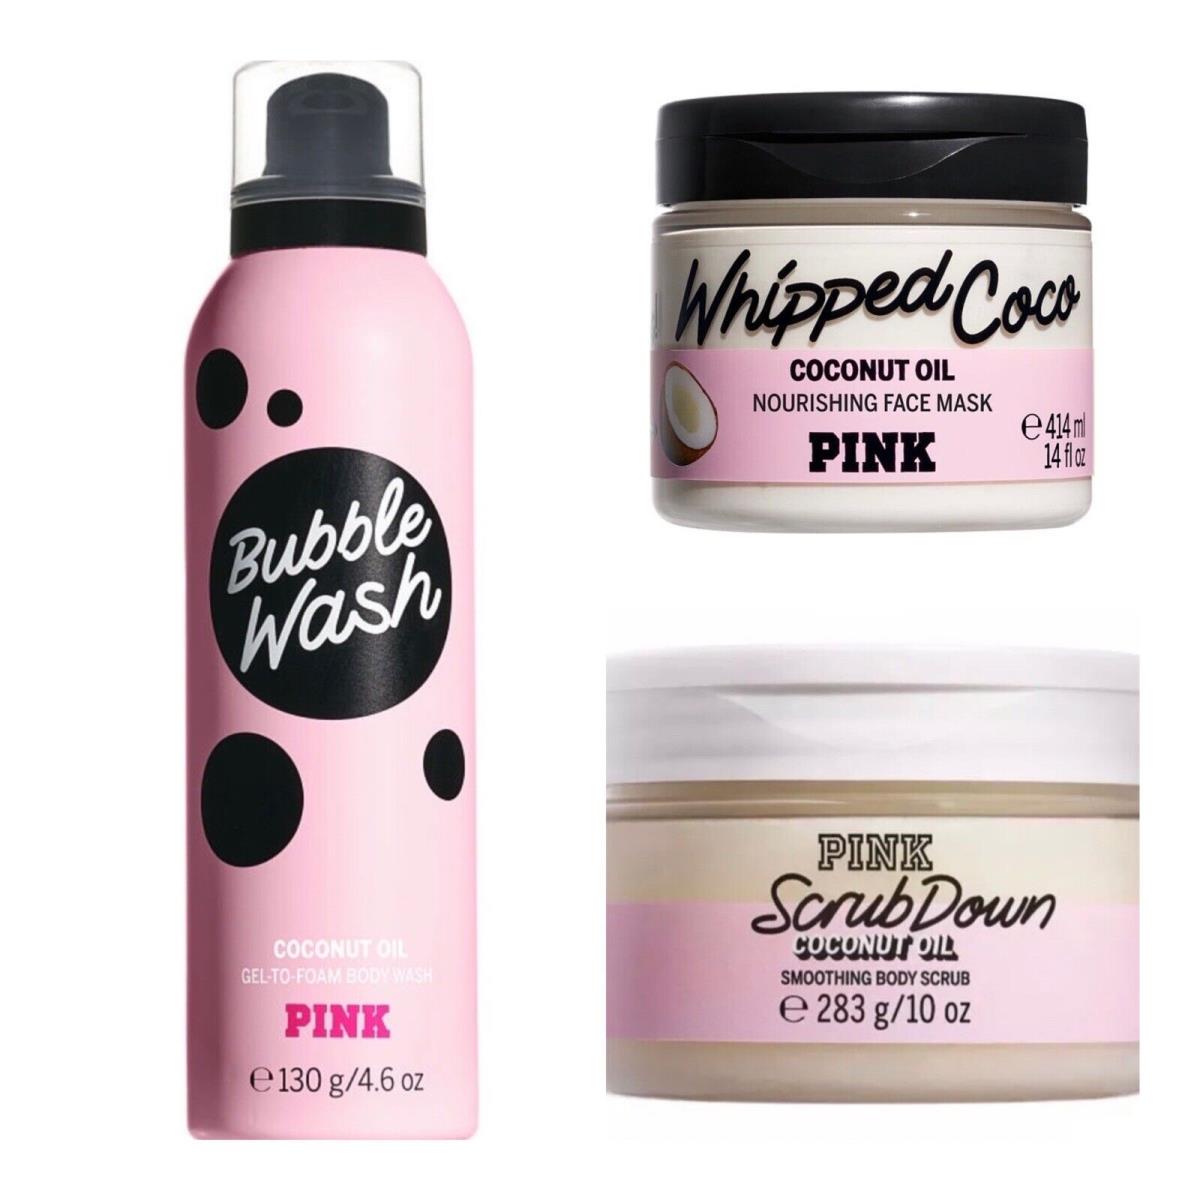 Victoria`s Secret Pink Coco Gel-to-foam Body Wash / Face Mask / Body Scrub